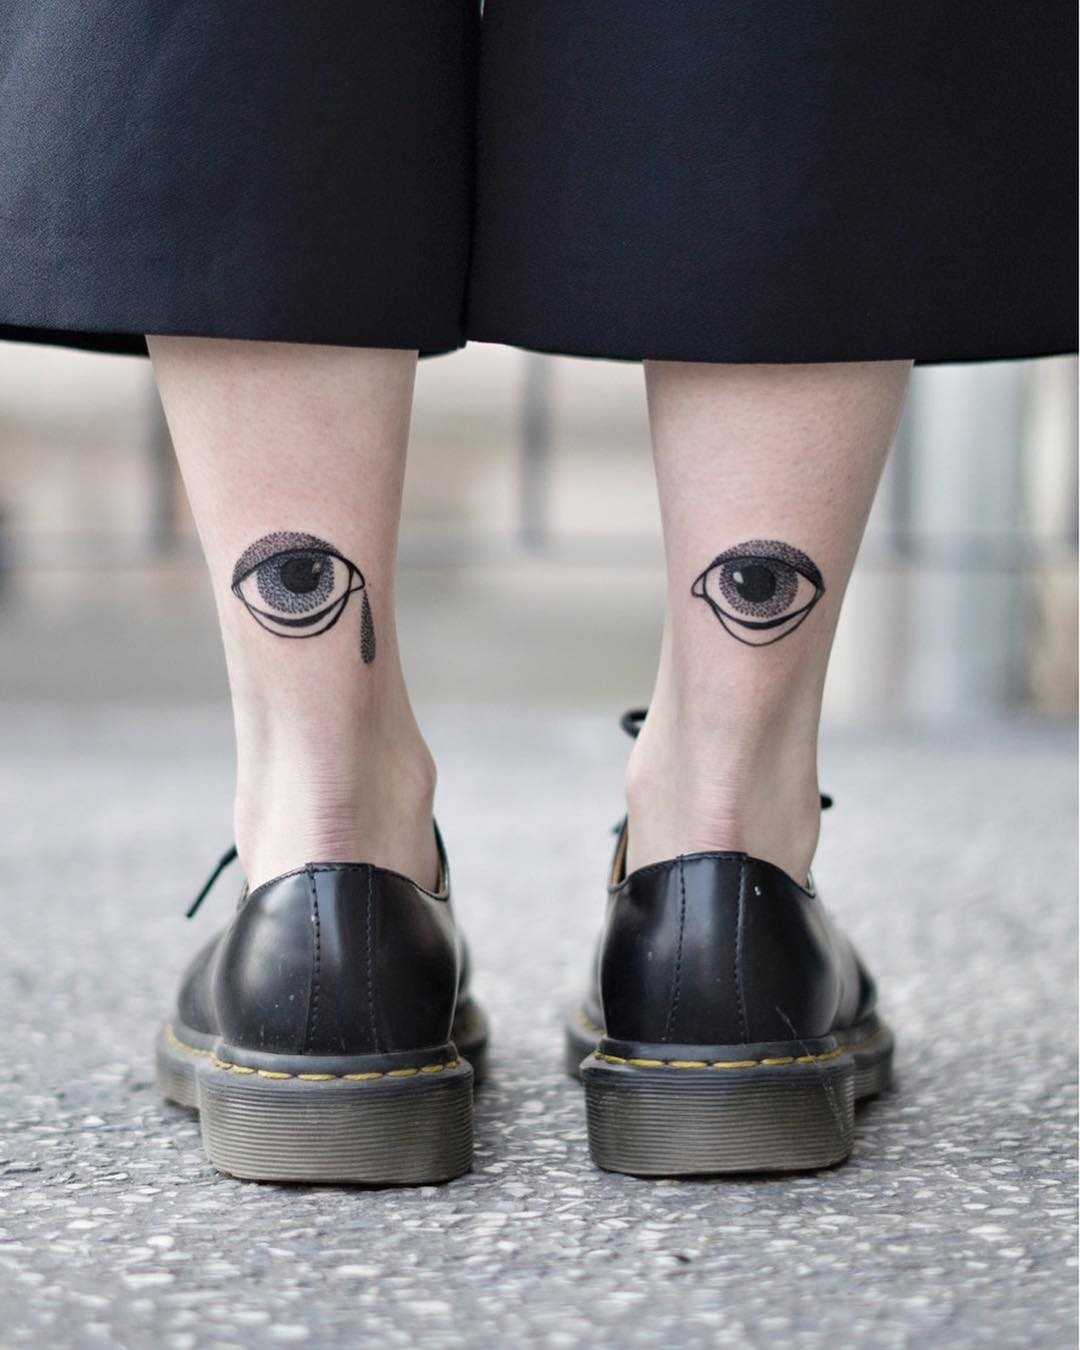 Blackwork eye tattoos by Dżudi Bazgrole